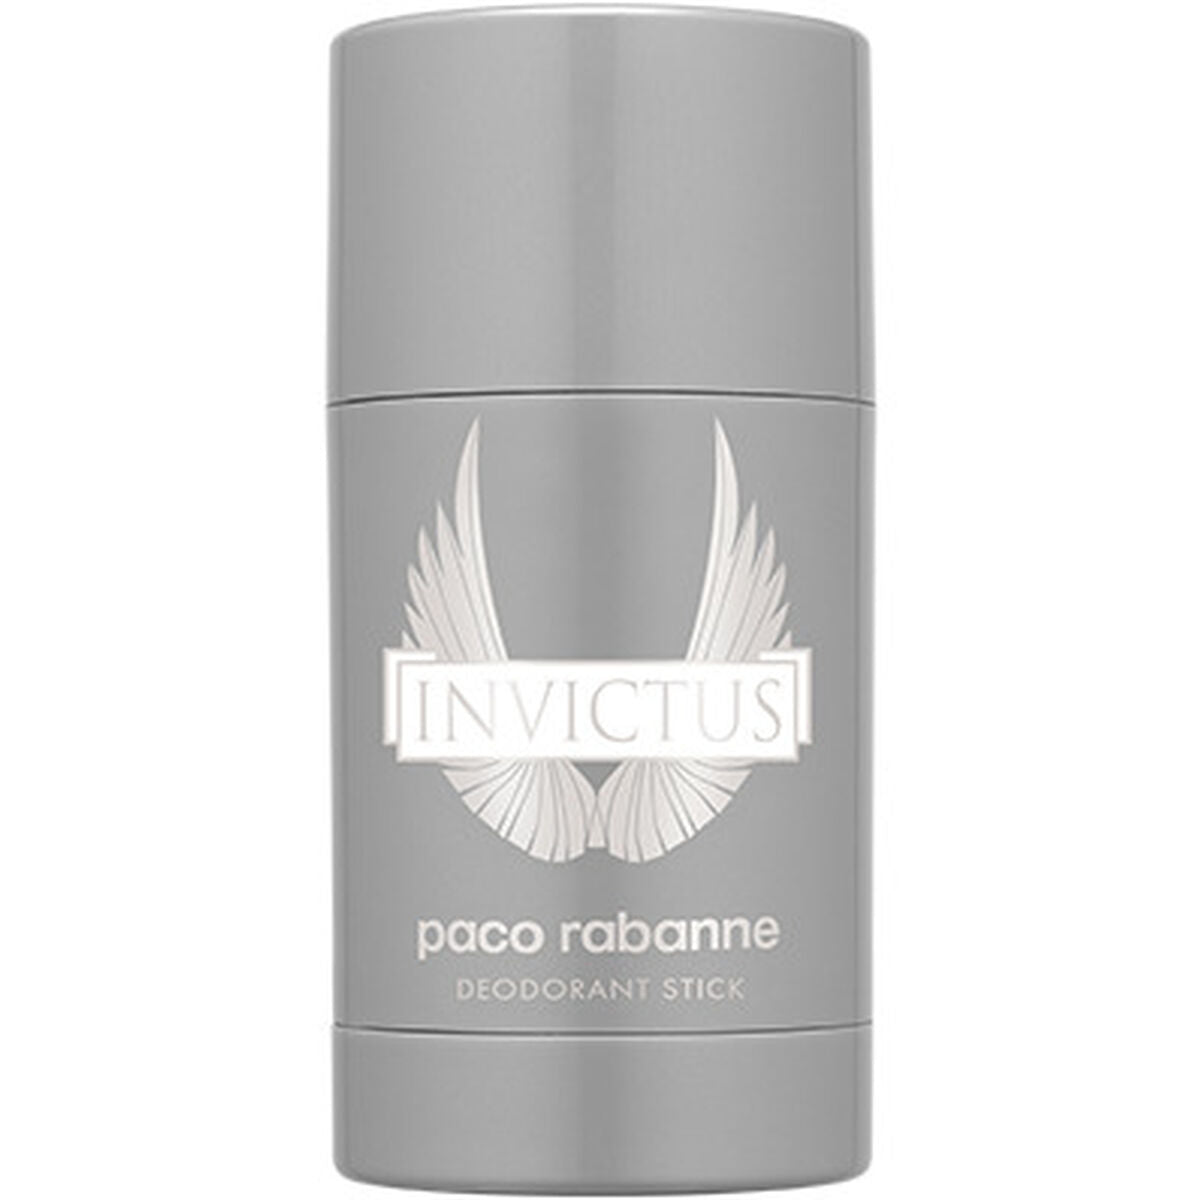 Stick Deodorant Paco Rabanne 75 ml Invictus-0